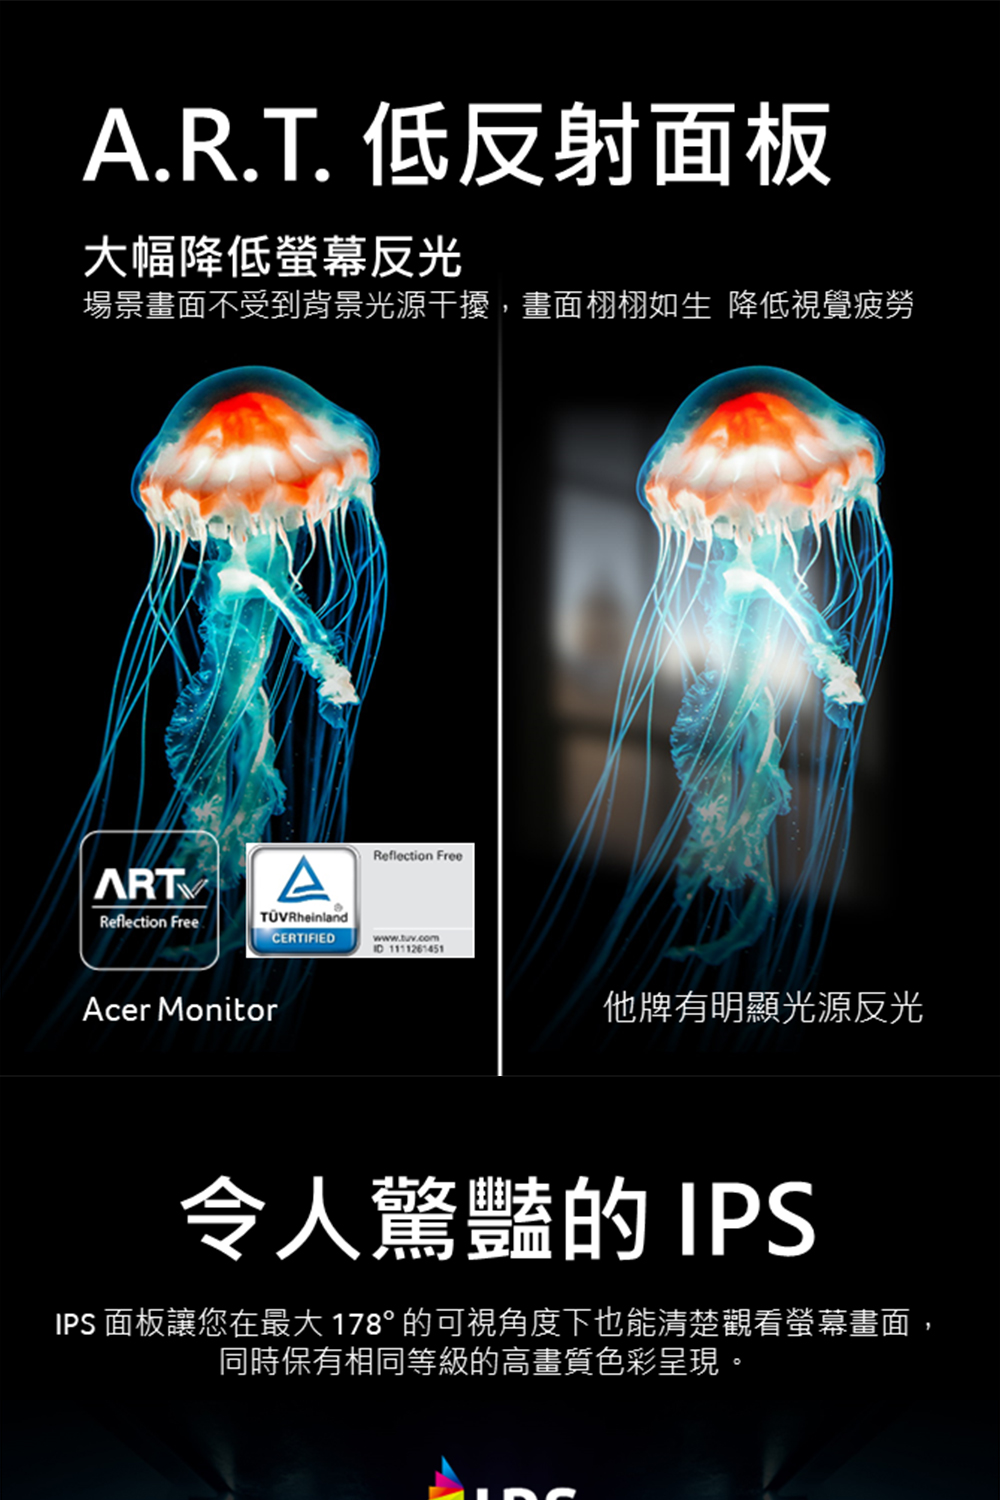 Acer 宏碁 XV272U R3 無反射螢幕(27型/2K